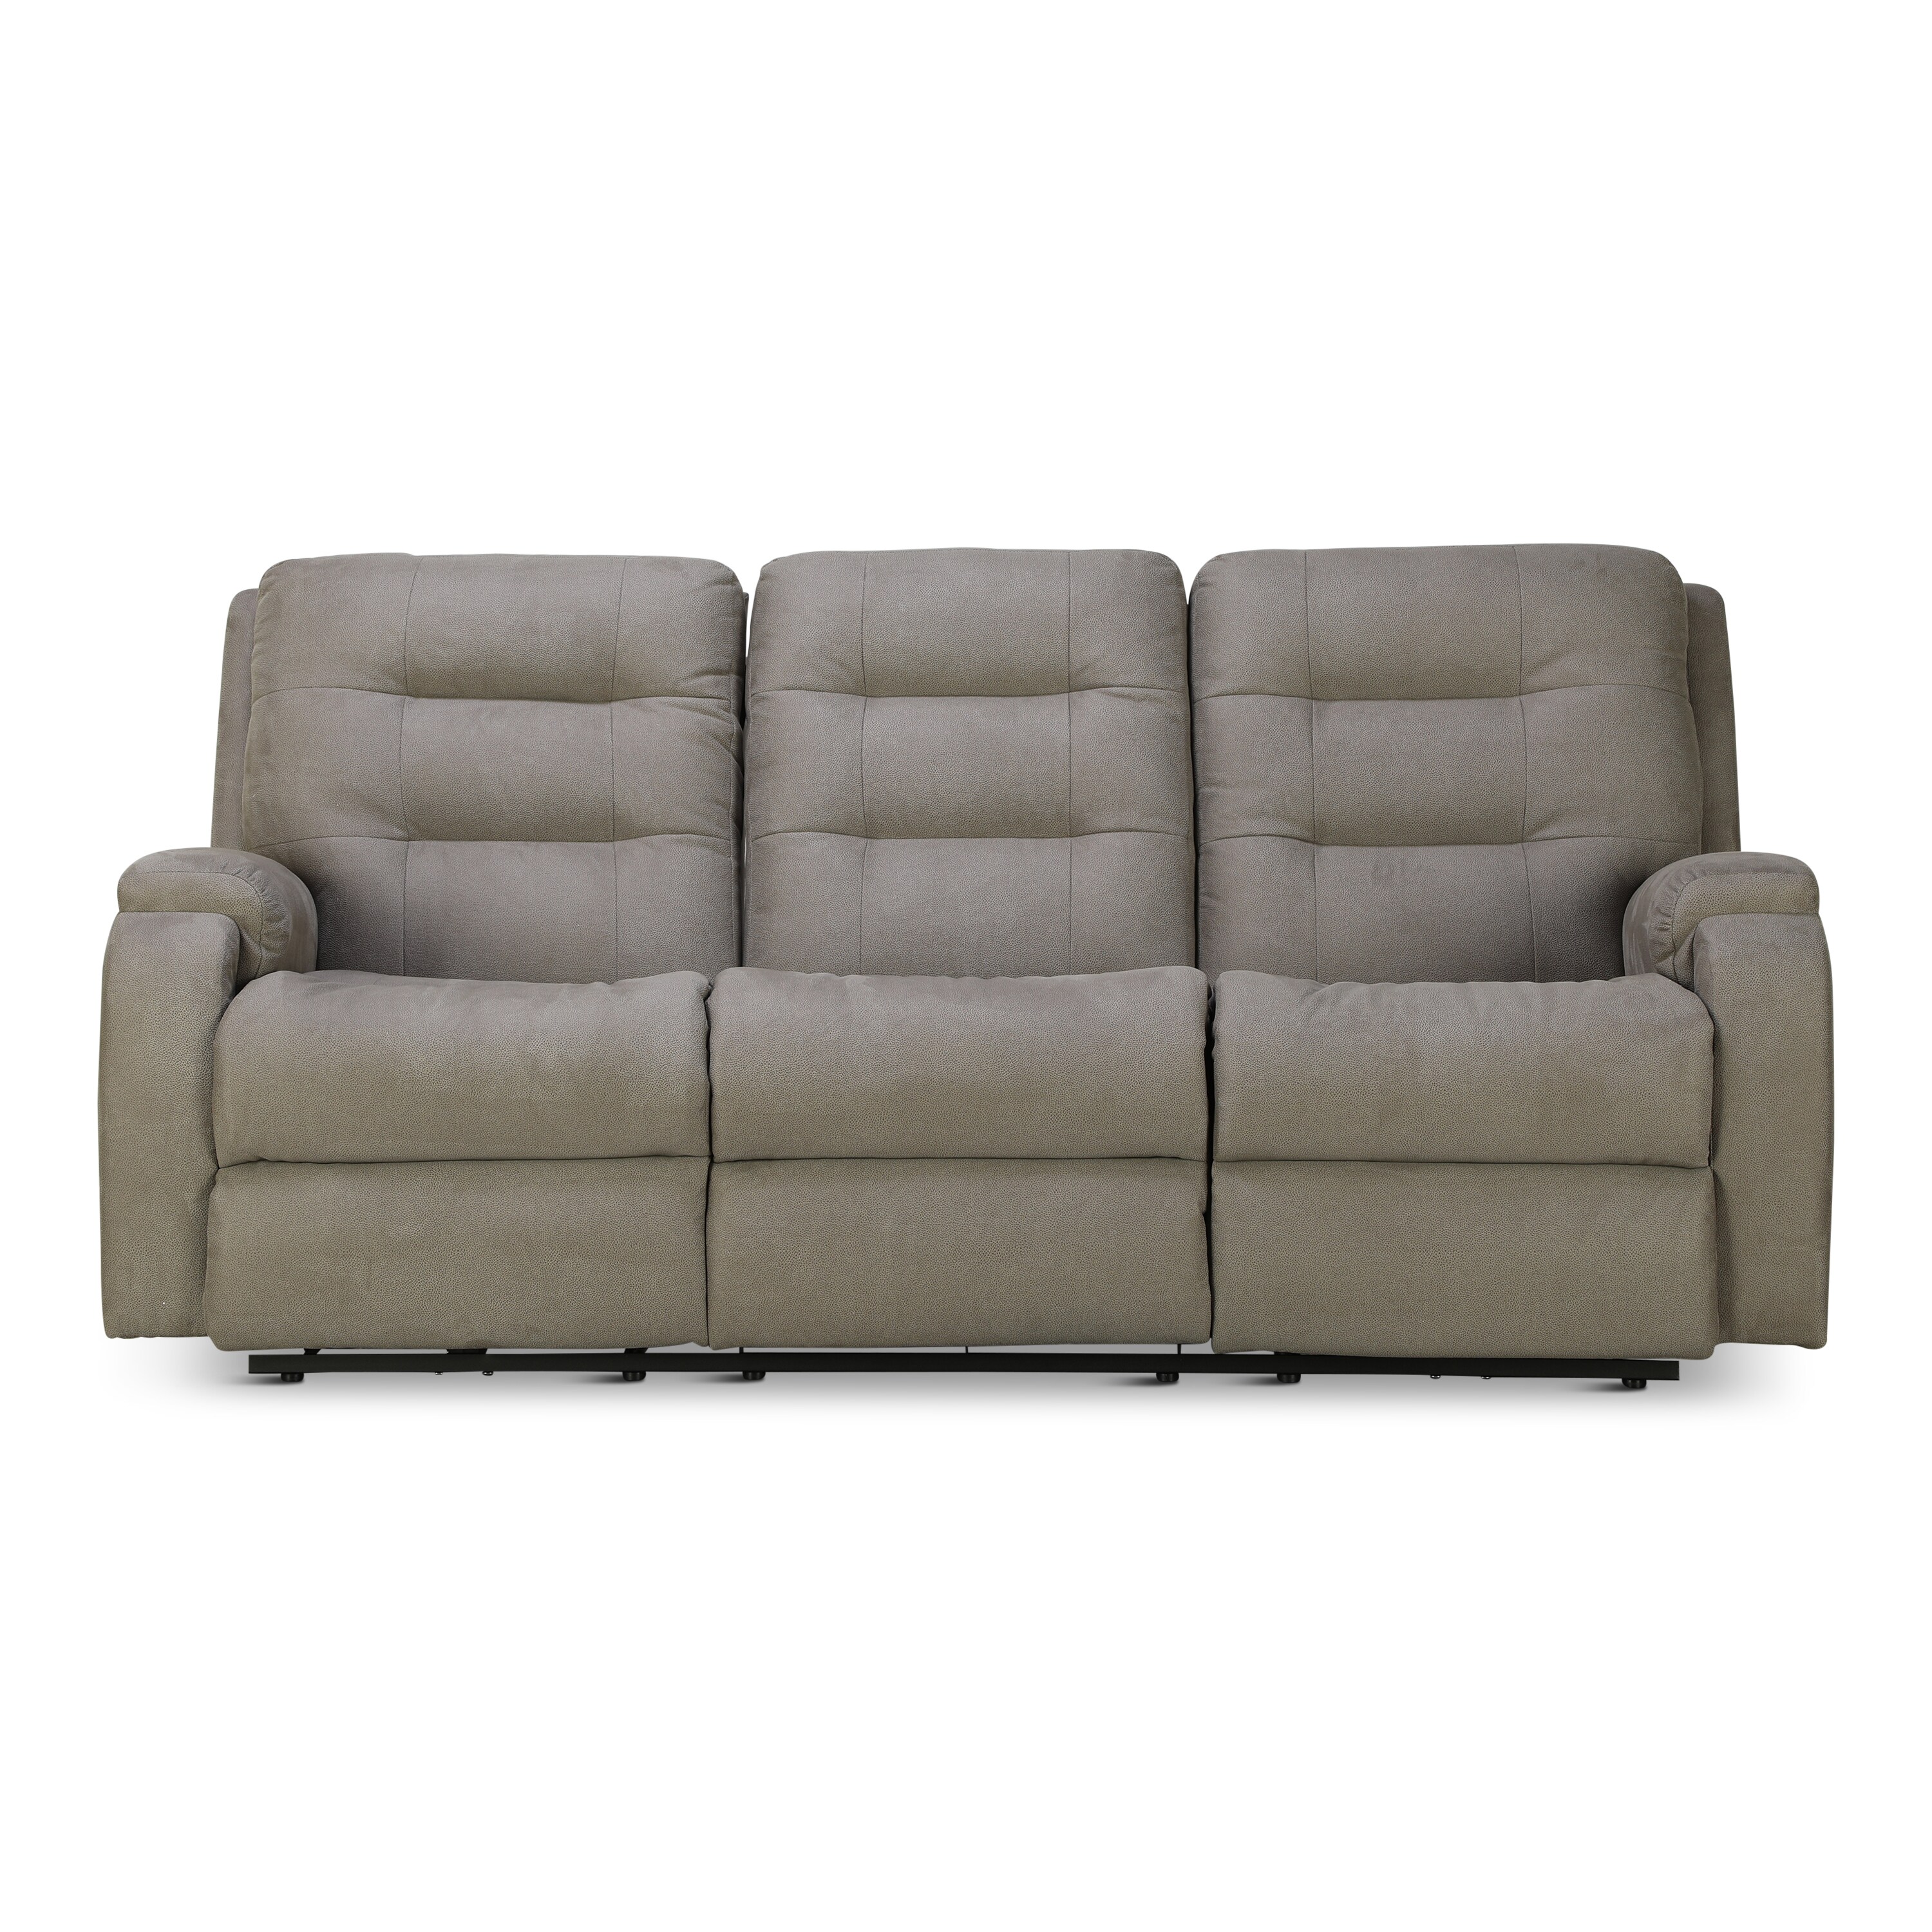 Levin Furniture Leather Sofas Baci Living Room 6678